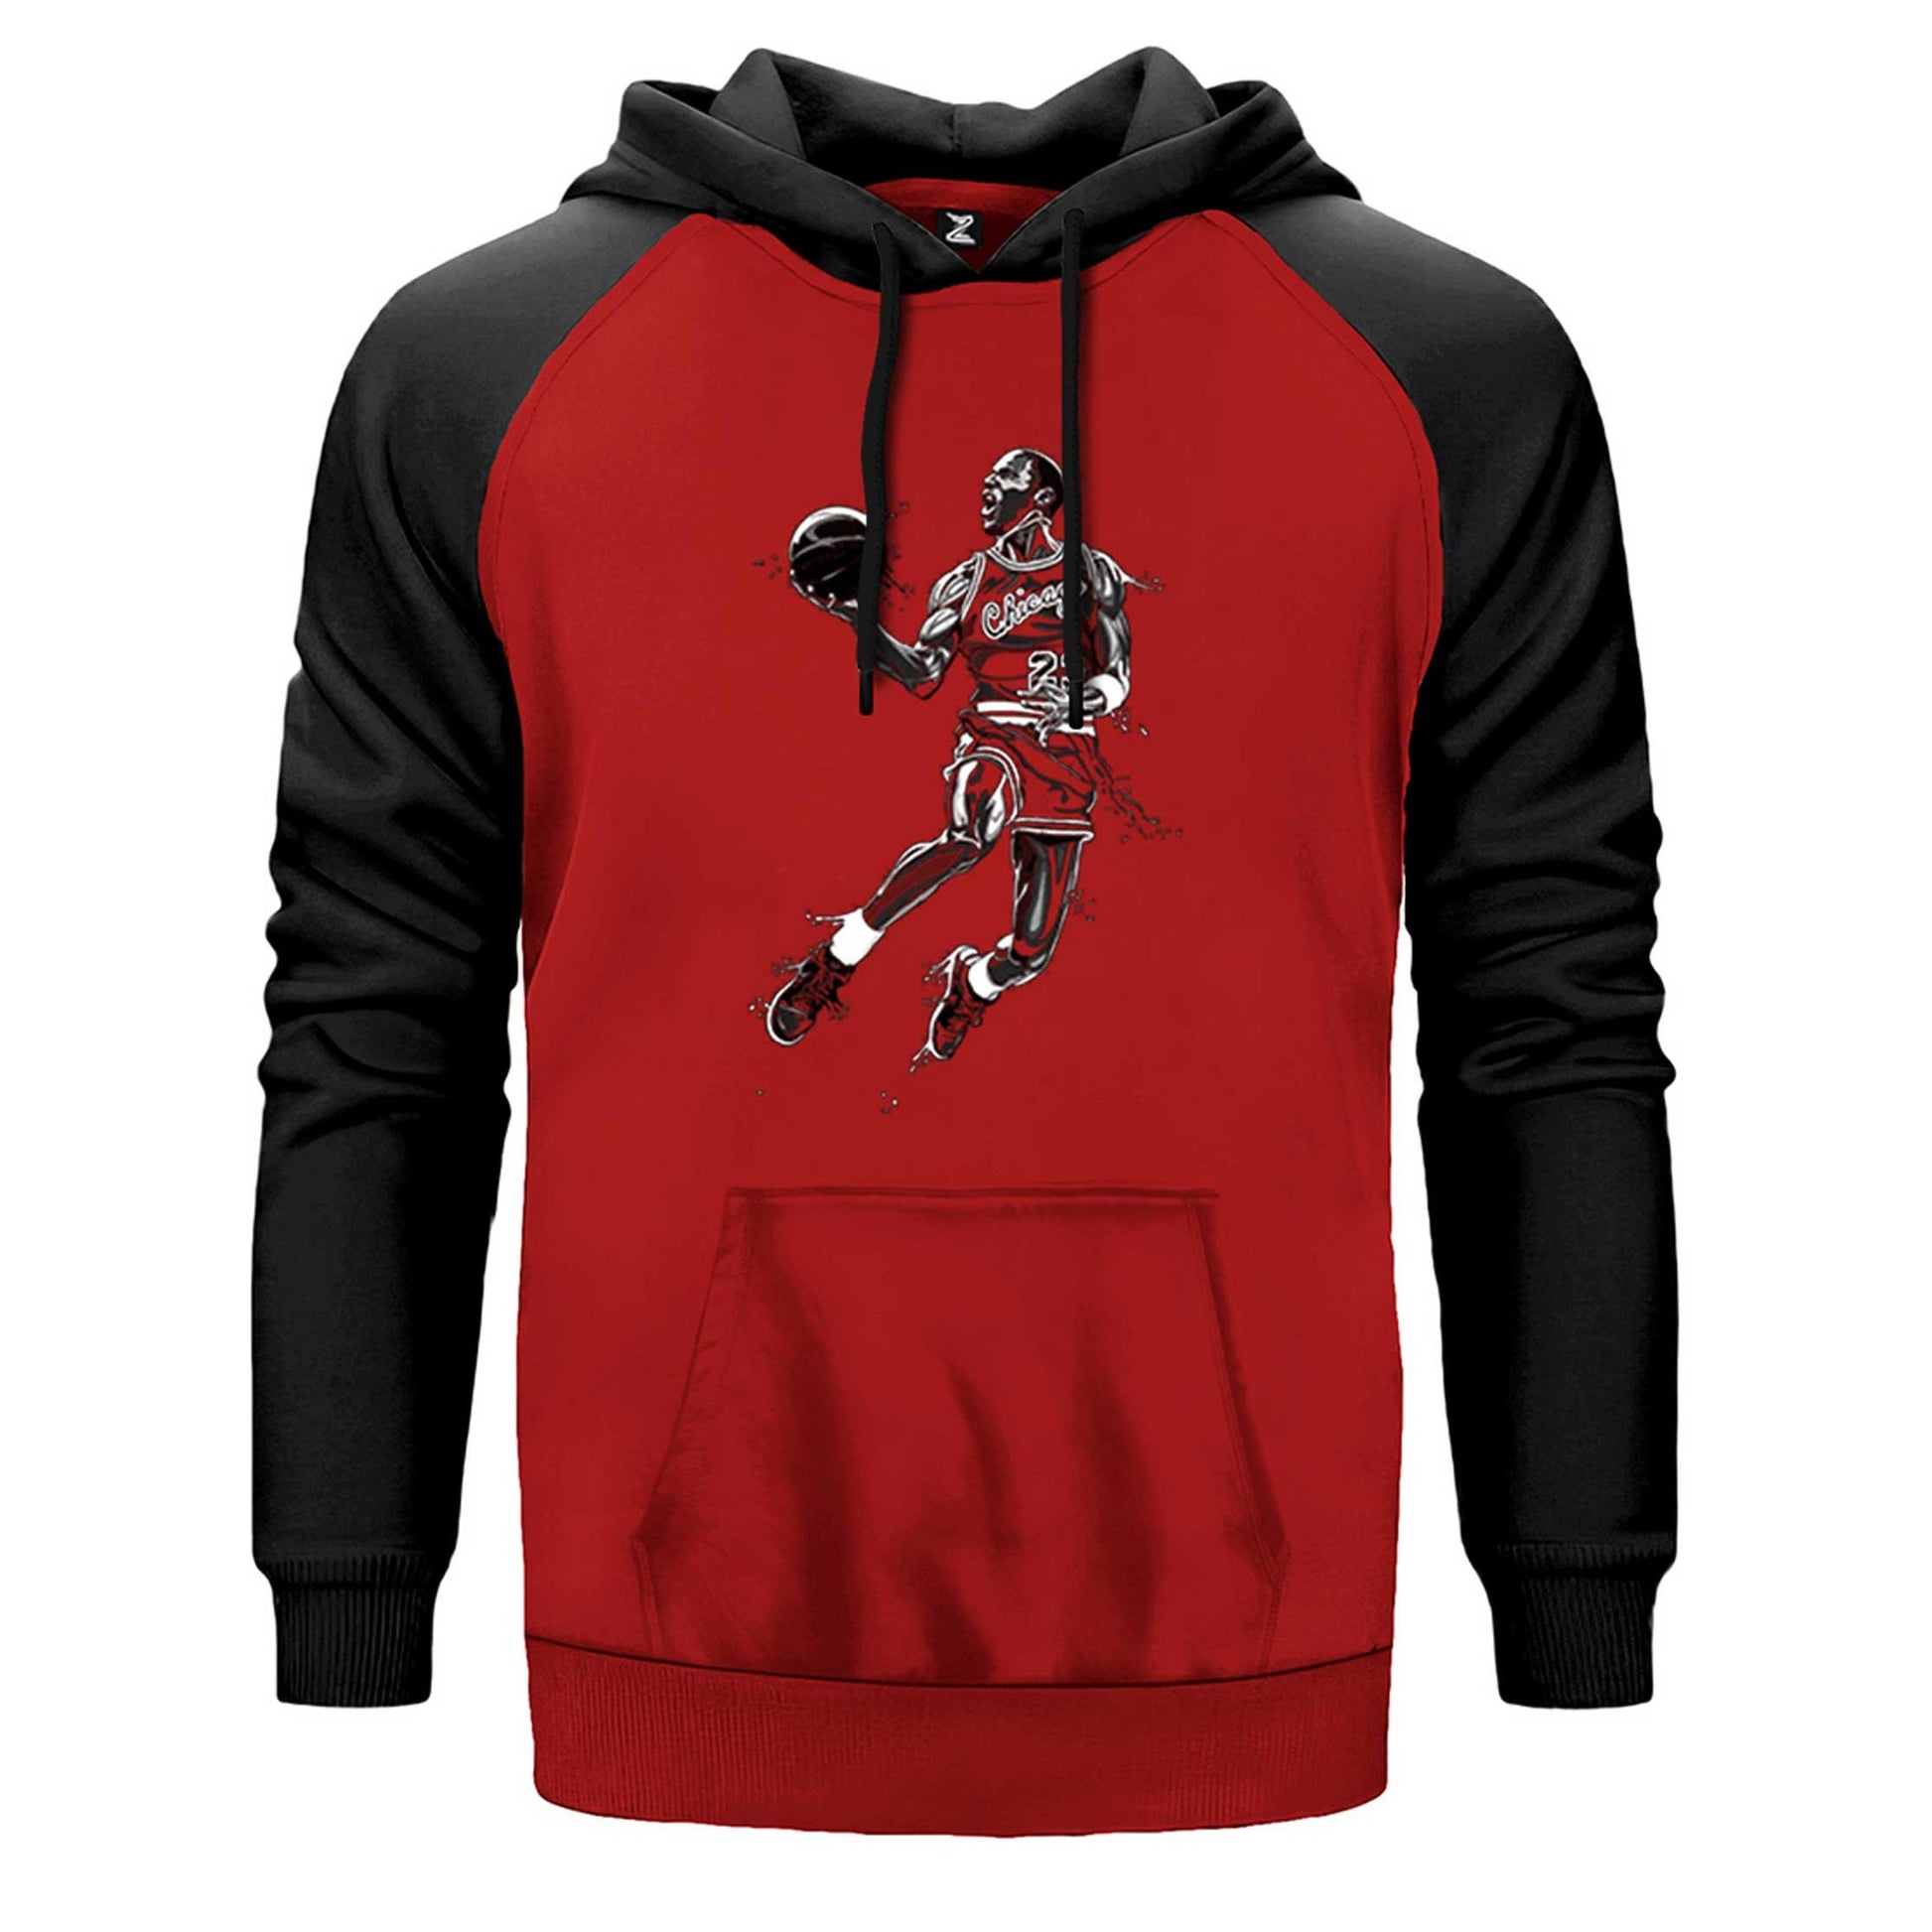 Michael Jordan Black Çift Renk Reglan Kol Sweatshirt - Zepplingiyim